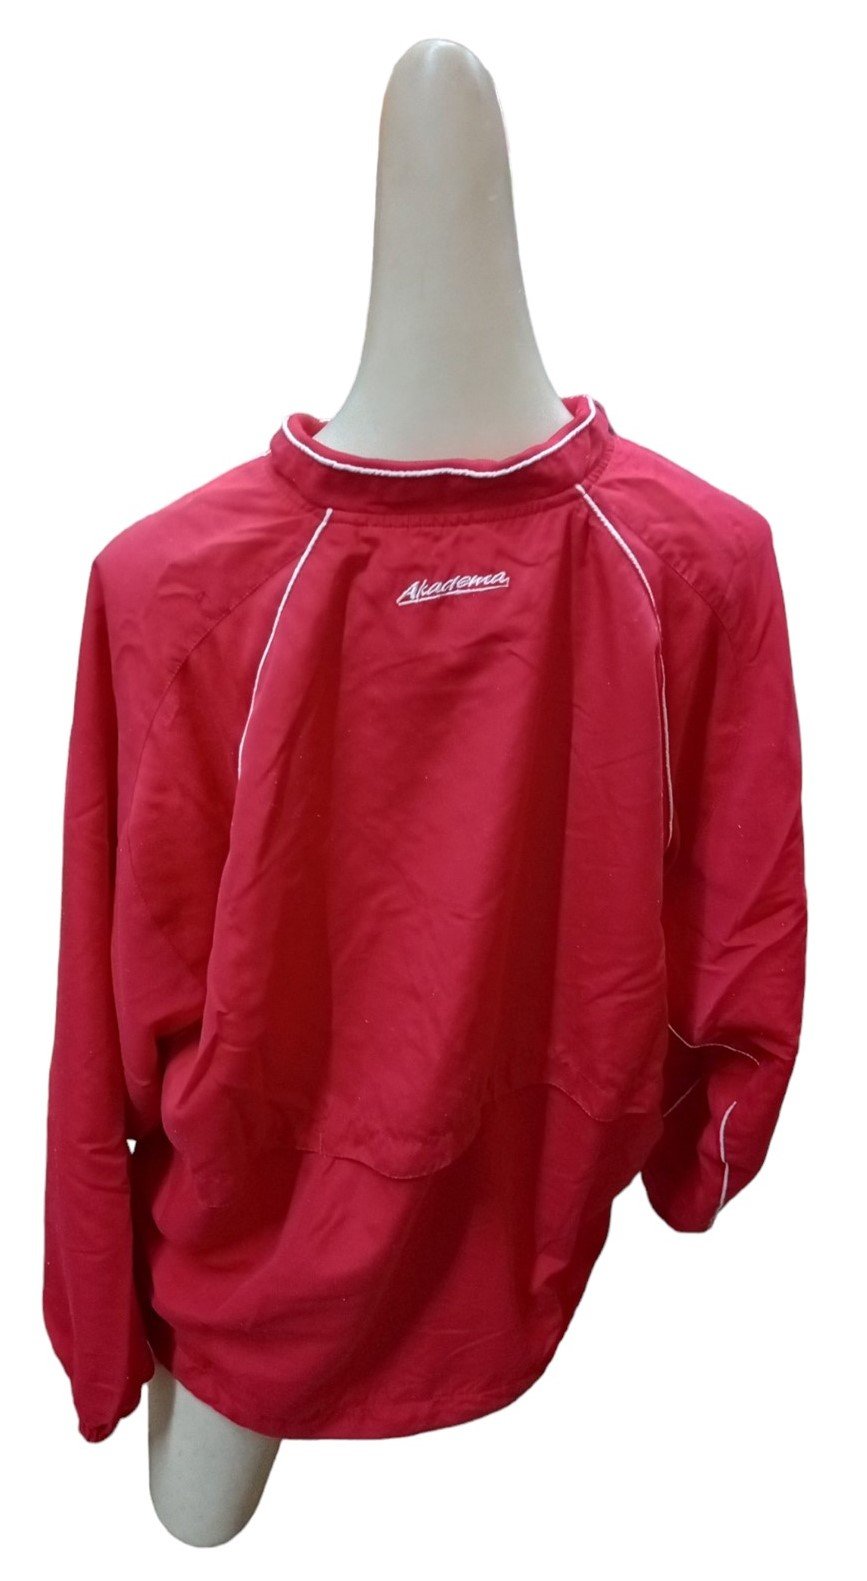 Akadema Red Baseball Jacket Adult M Size Unisex Sportswear Apparel Sports